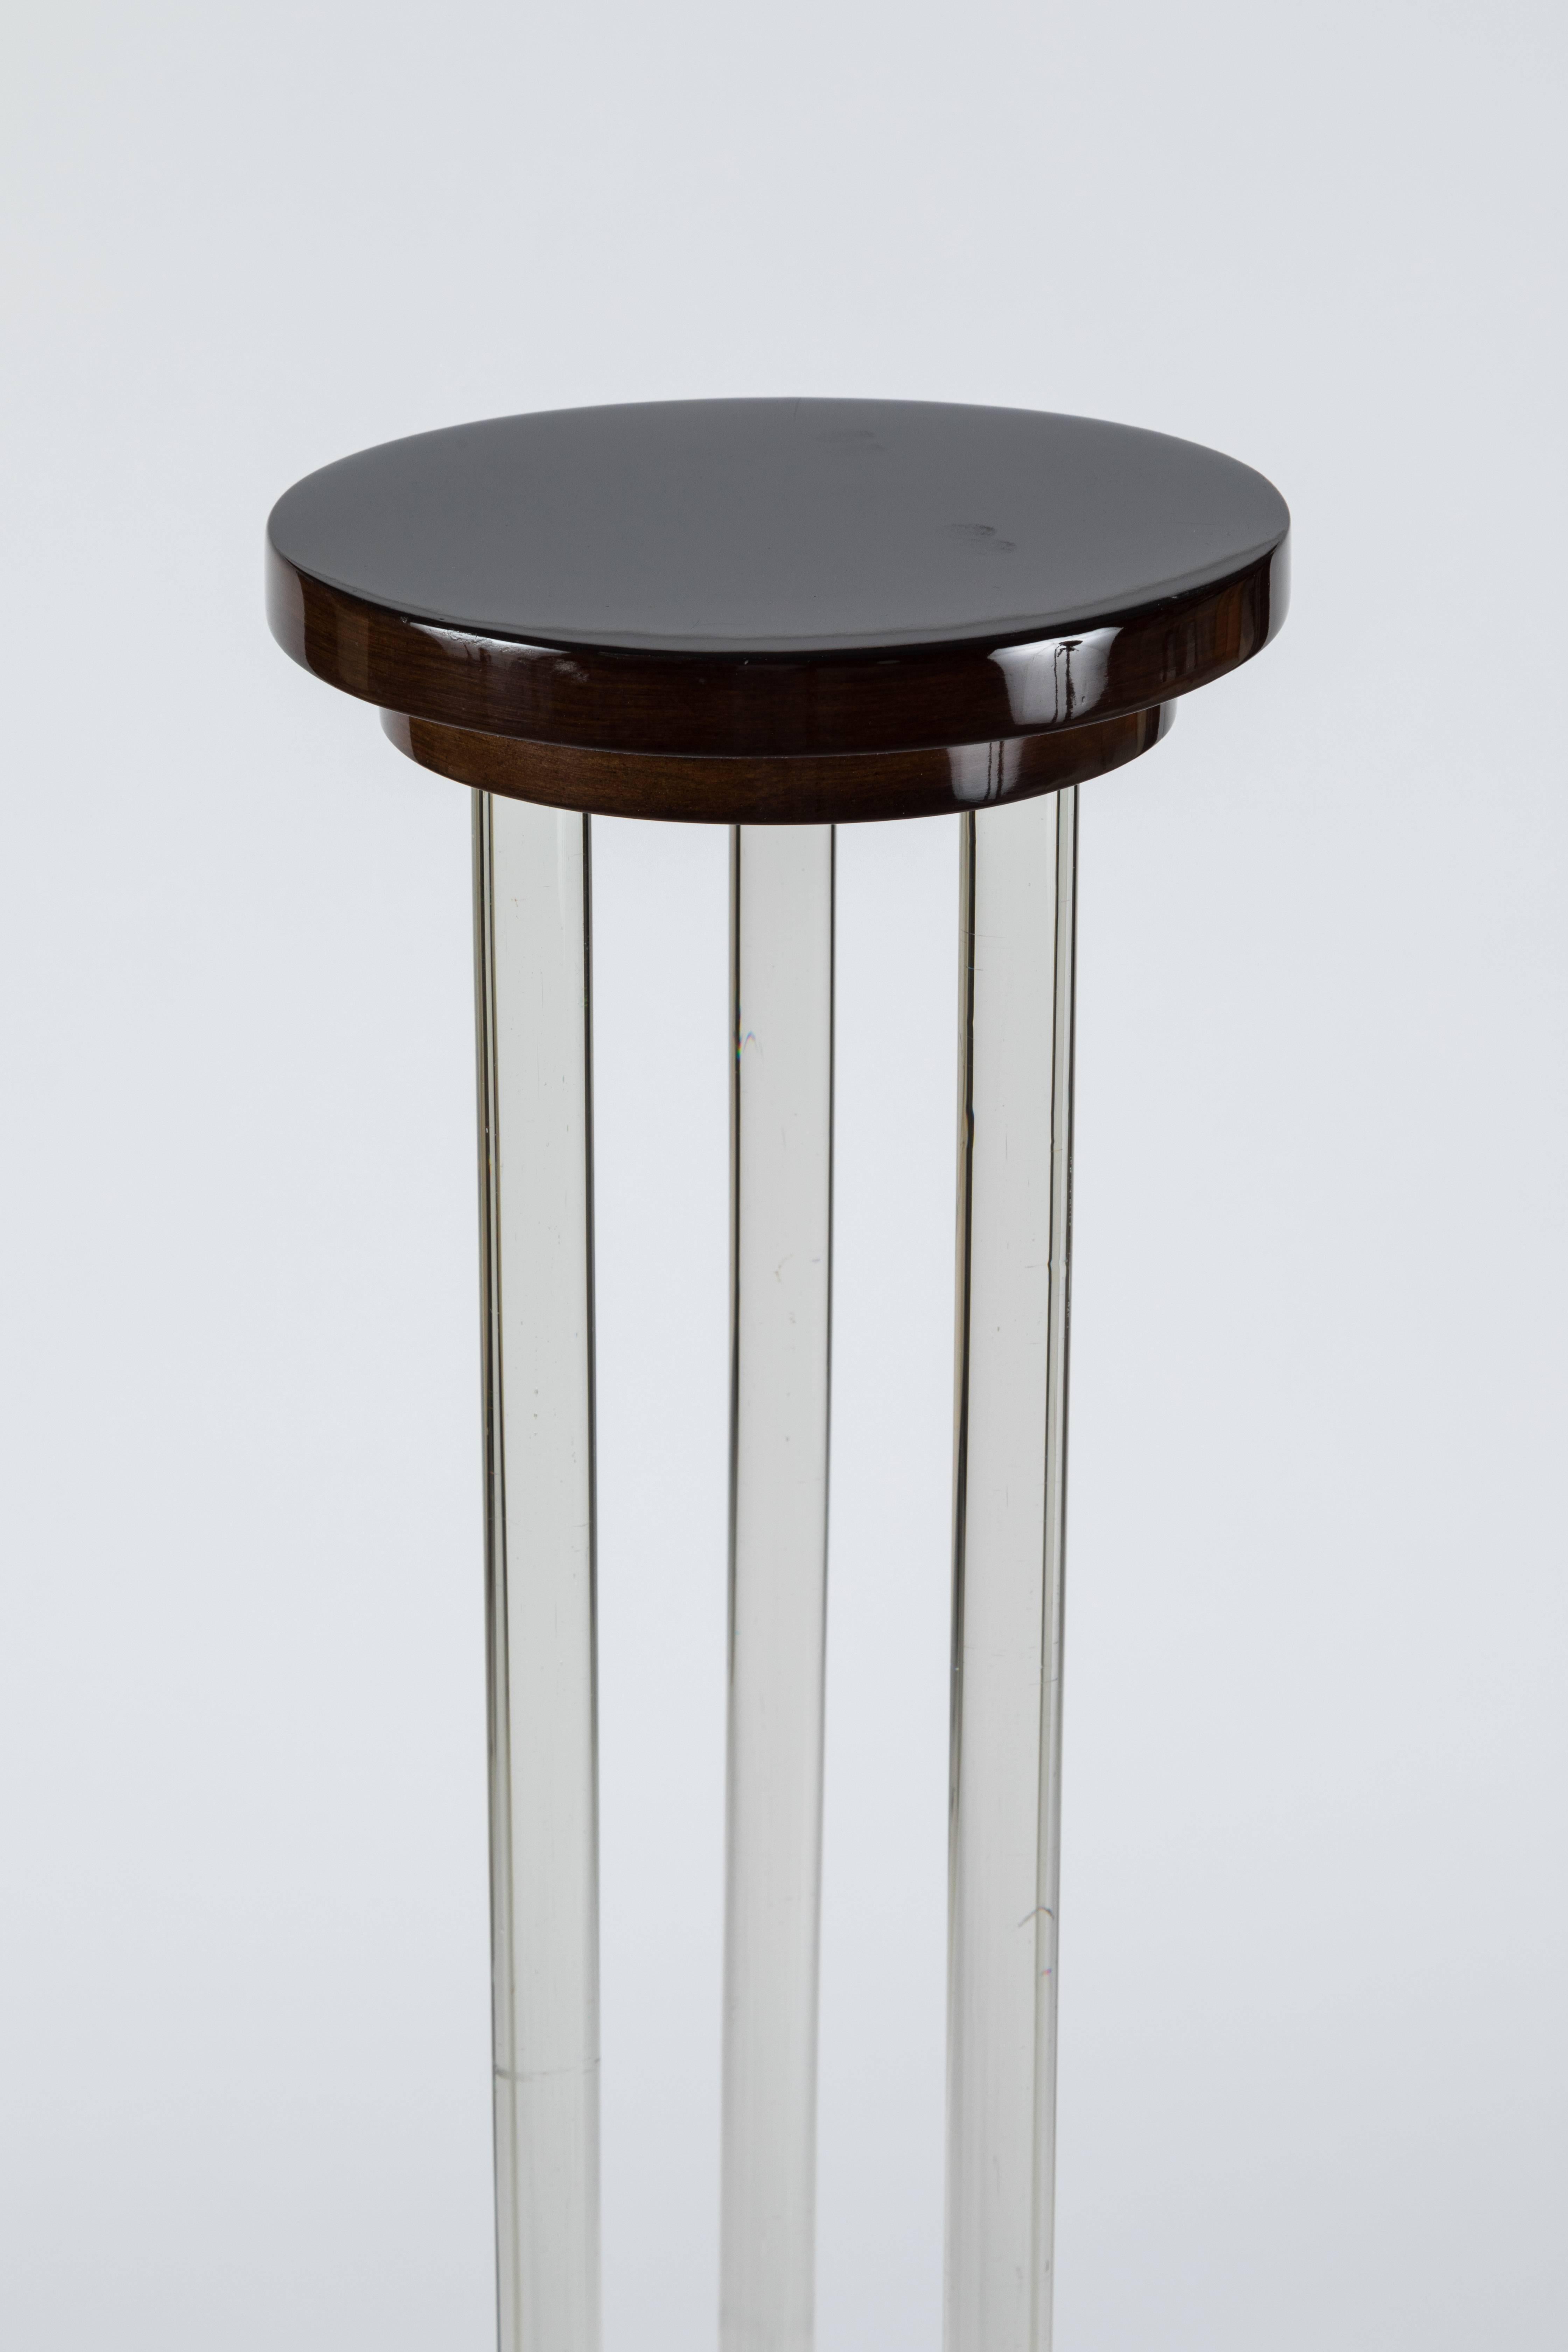 American Art Deco Glass and Wood Pedestal